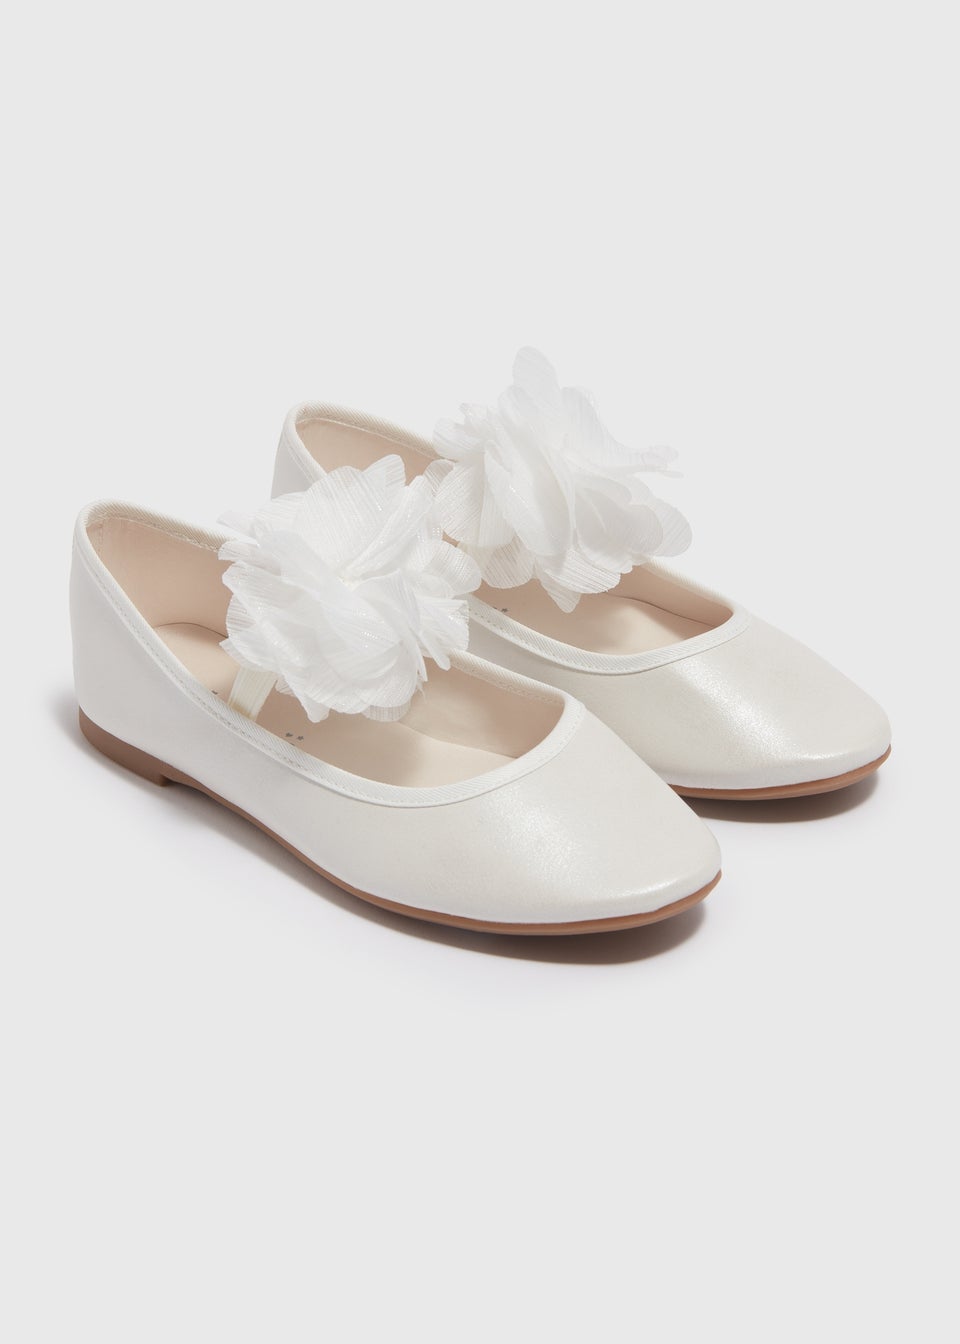 Girls Ballet Shoes | Girls Flat Shoes & Slip On Shoes - Matalan